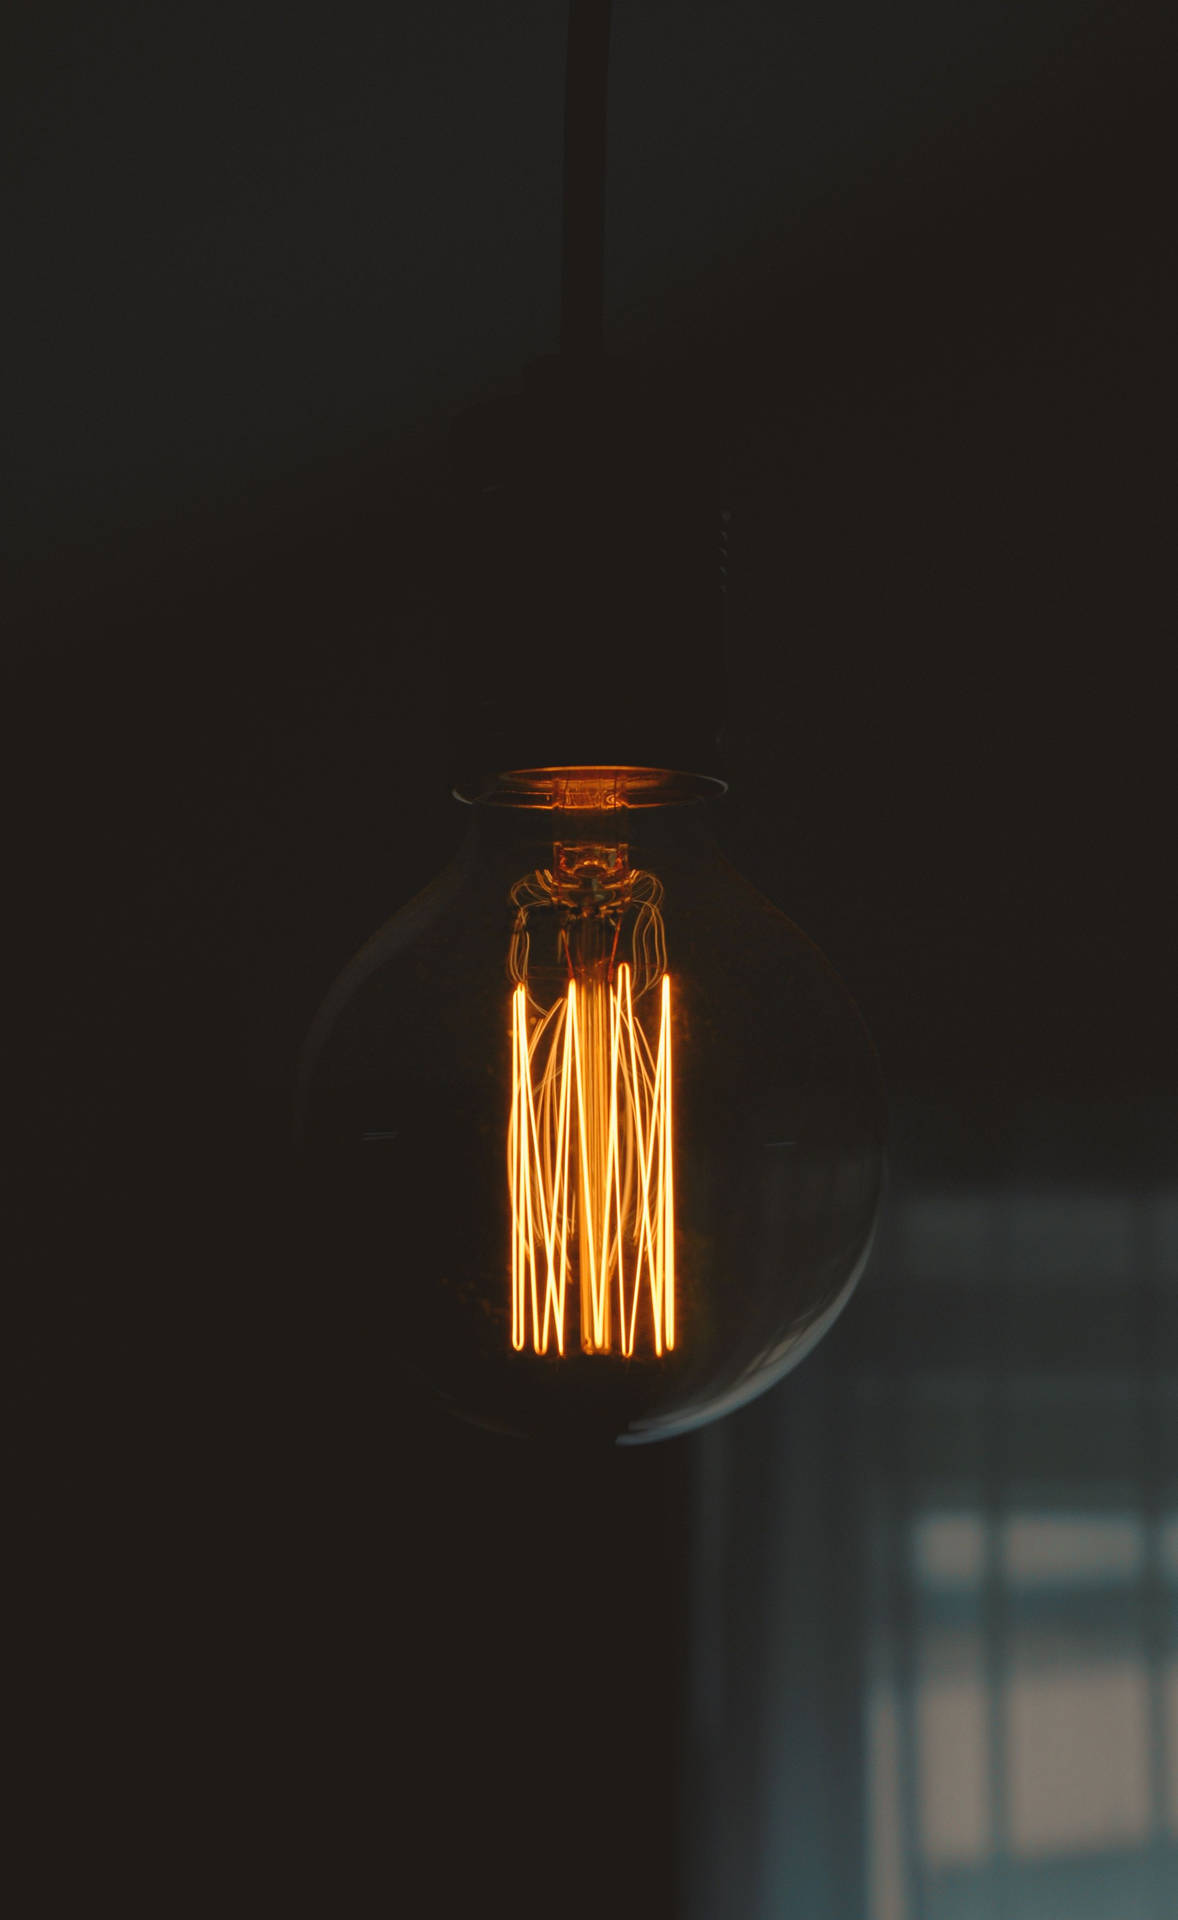 Illuminated Oled Lightbulb Against A Dark Background On An Iphone. Background